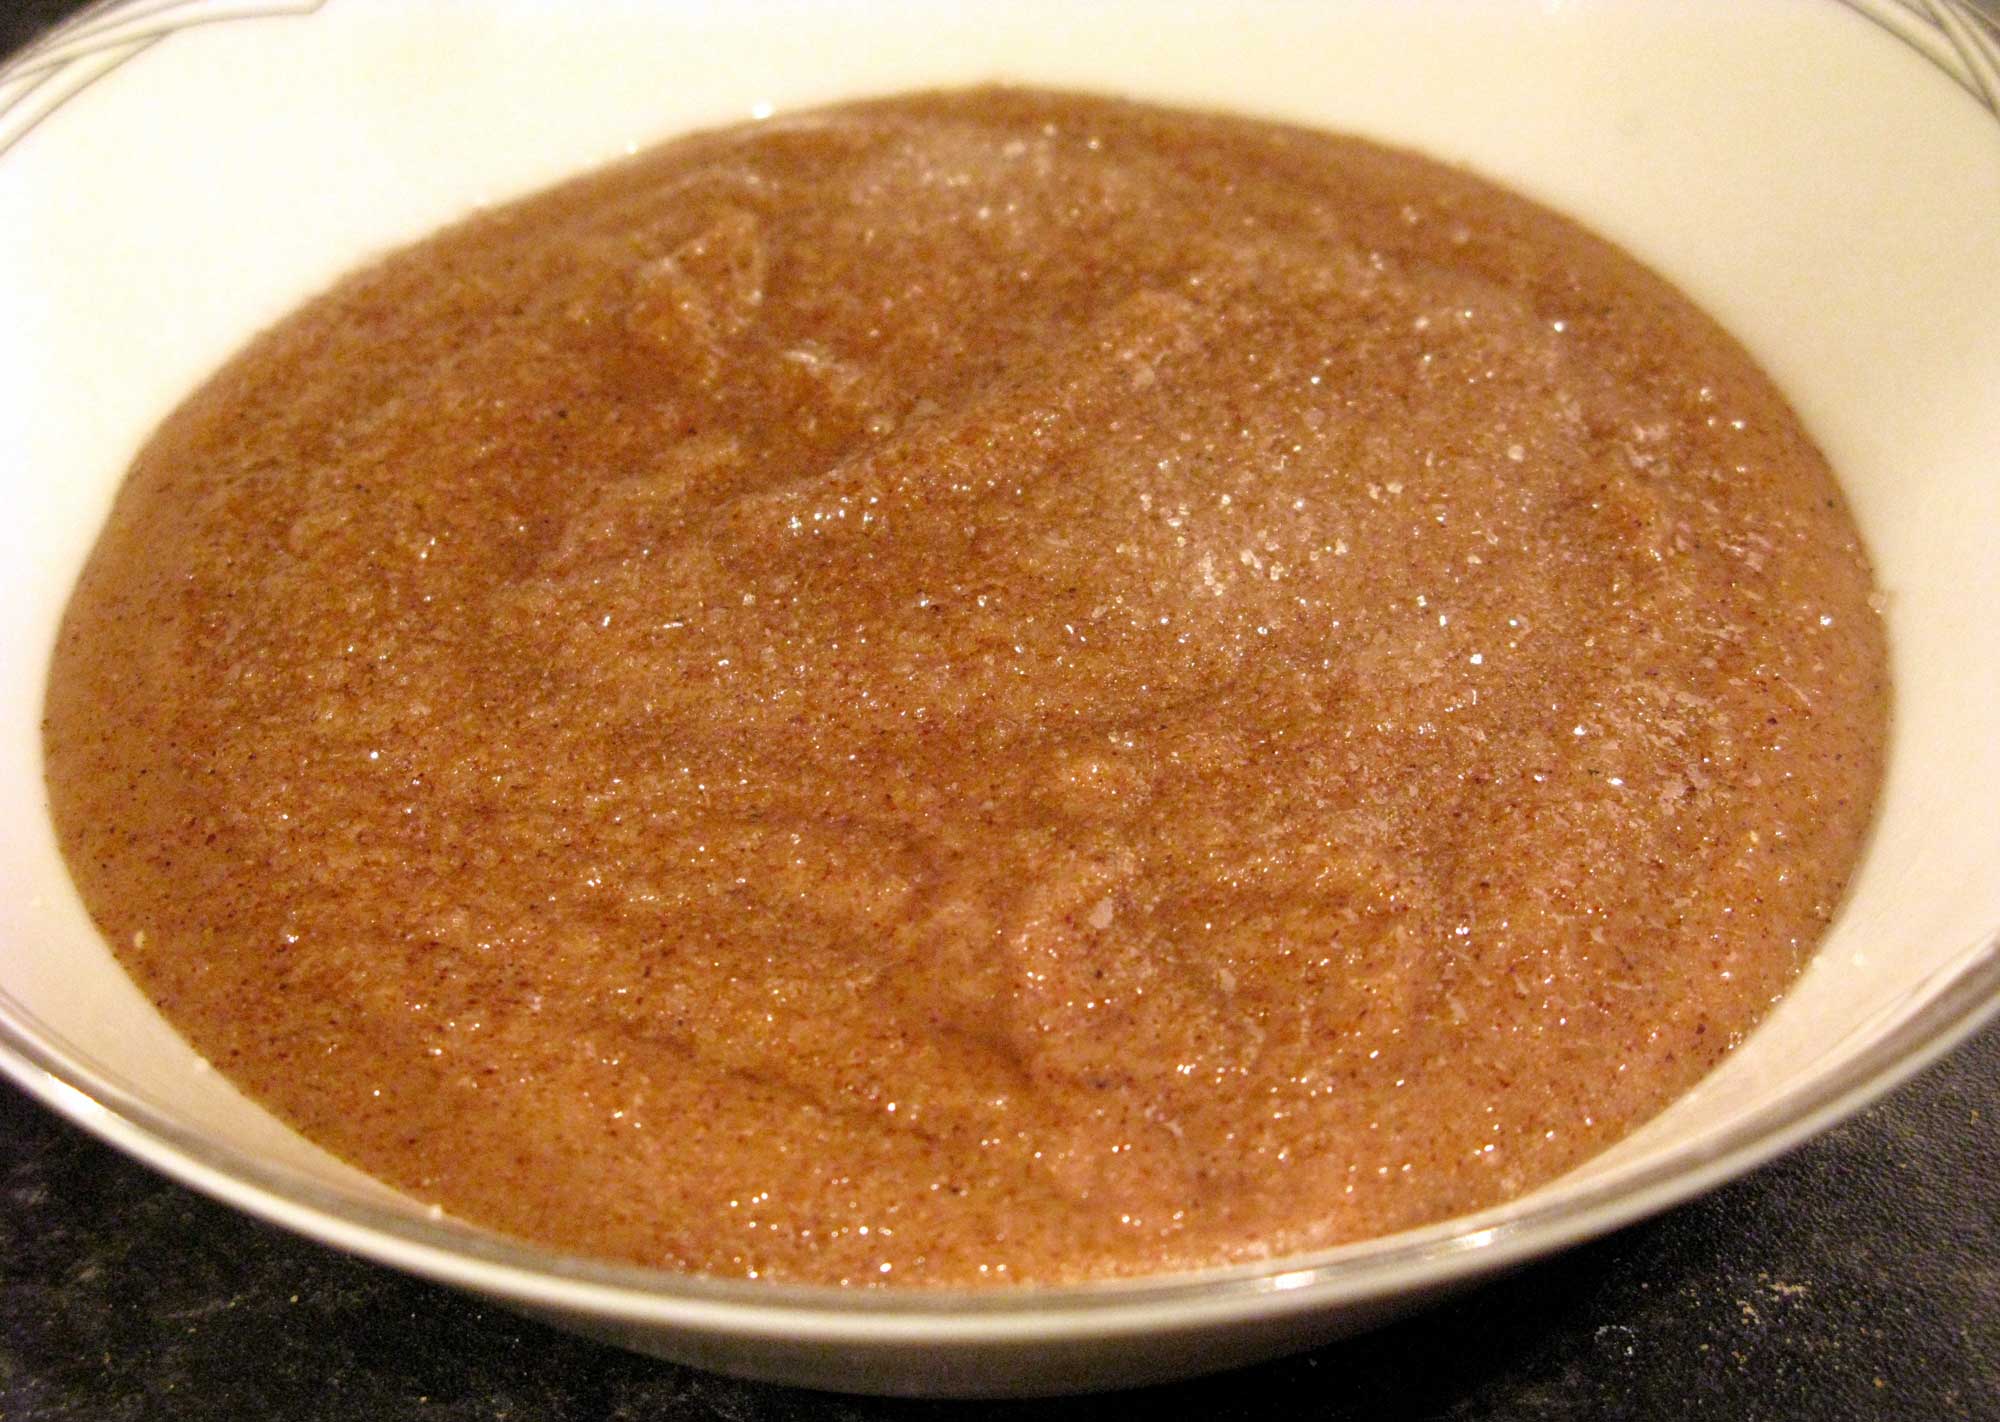 Photograph of sorghum porridge. The photo shows a thick, granular, brown porridge in an off-white bowl.